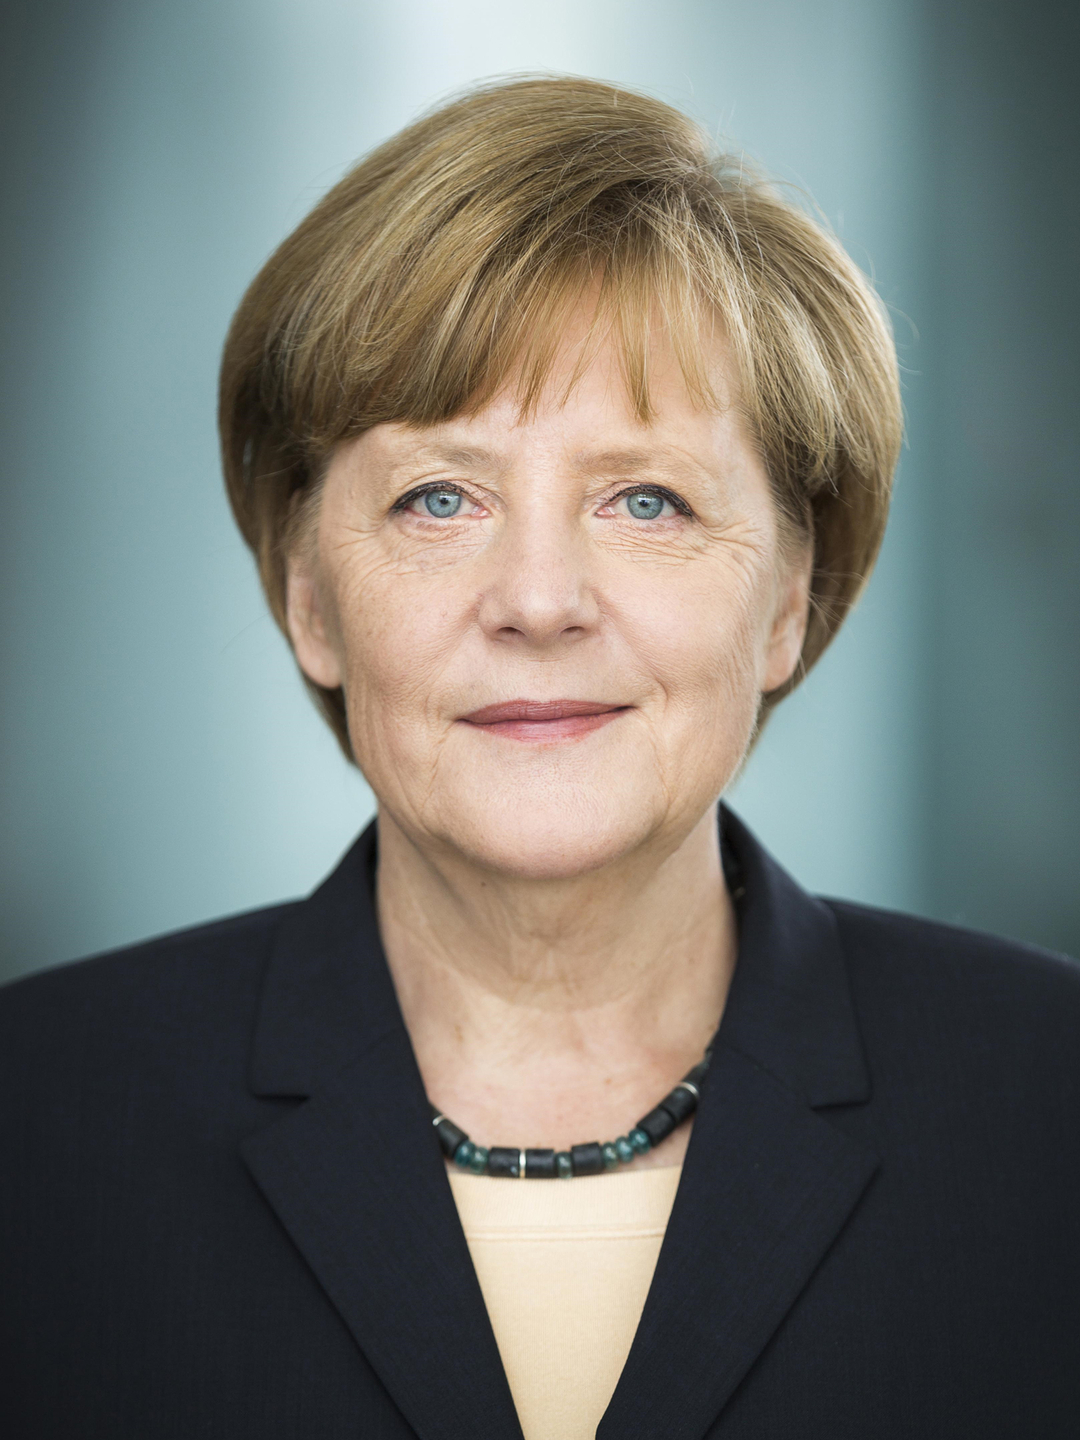 Angela Merkel dating history